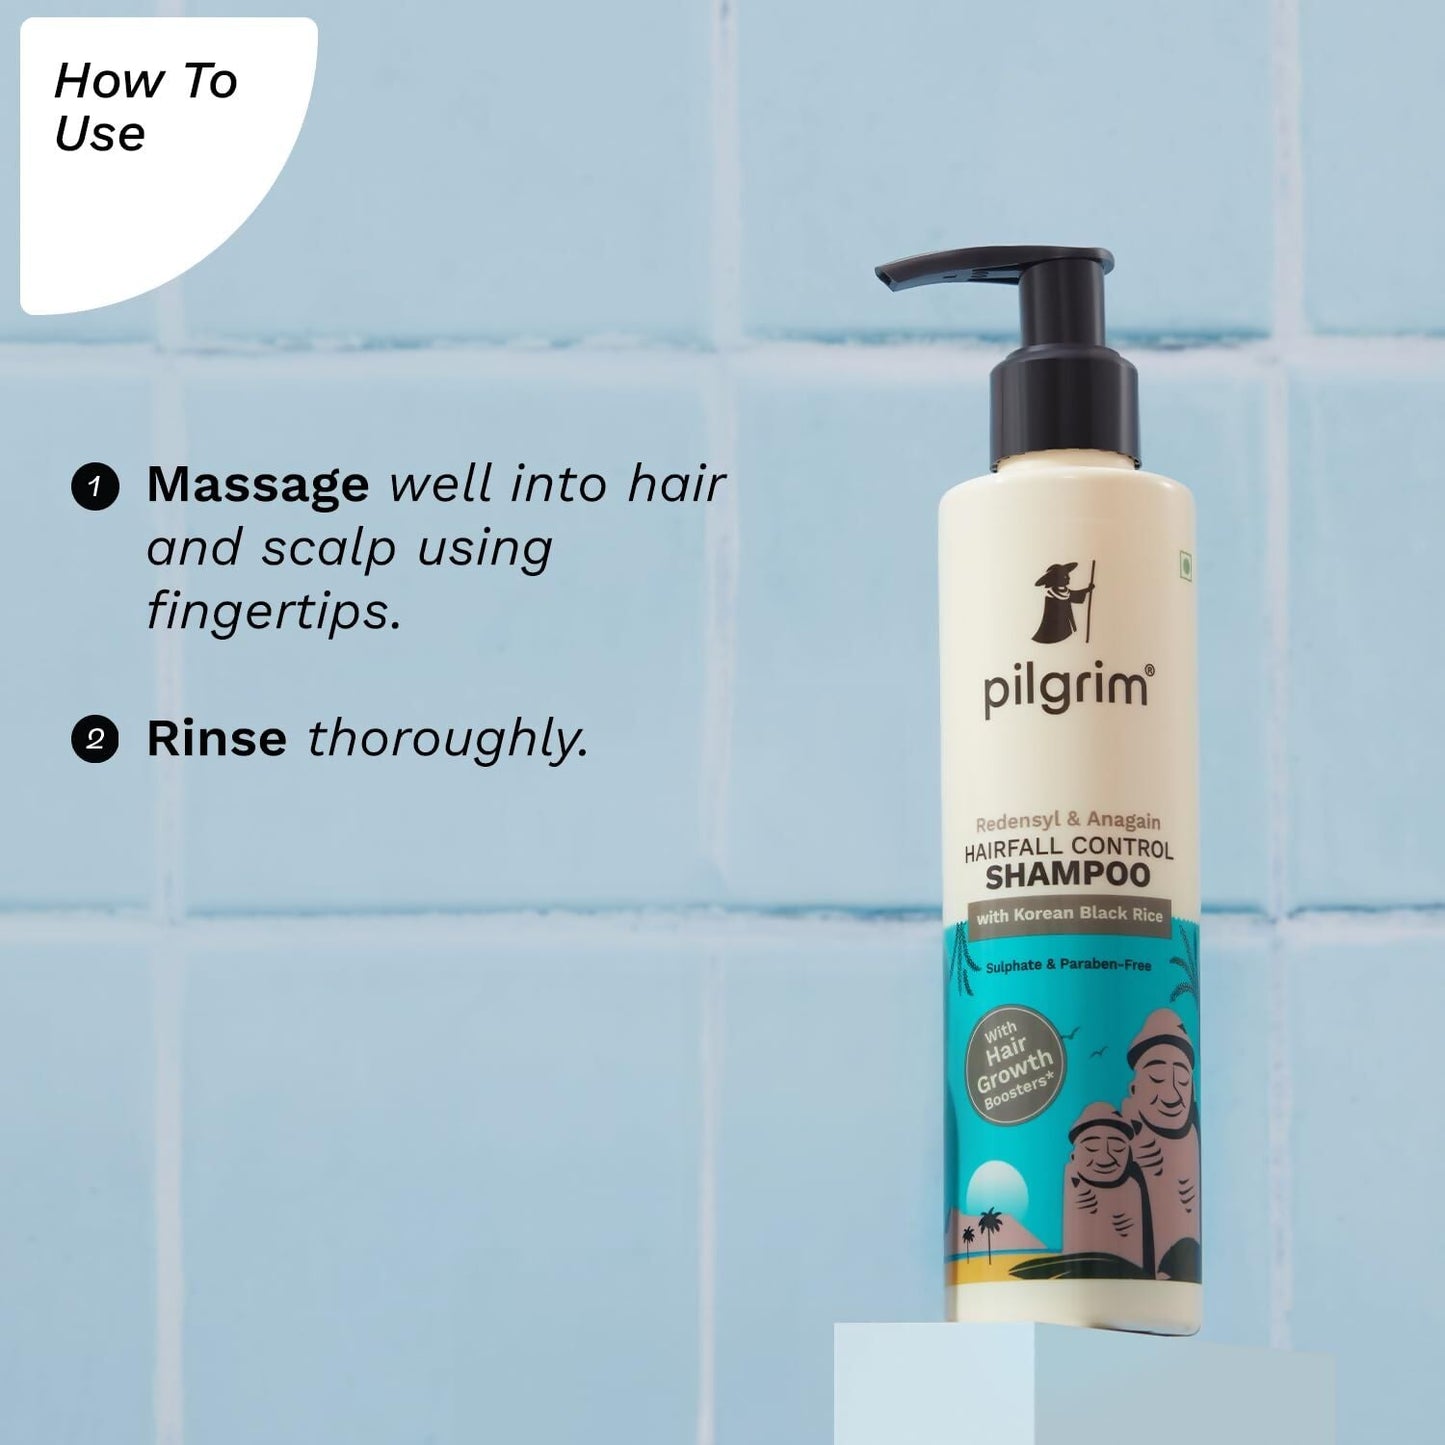 Pilgrim Redensyl & Anagain Hairfall Control Shampoo with Korean Black Rice